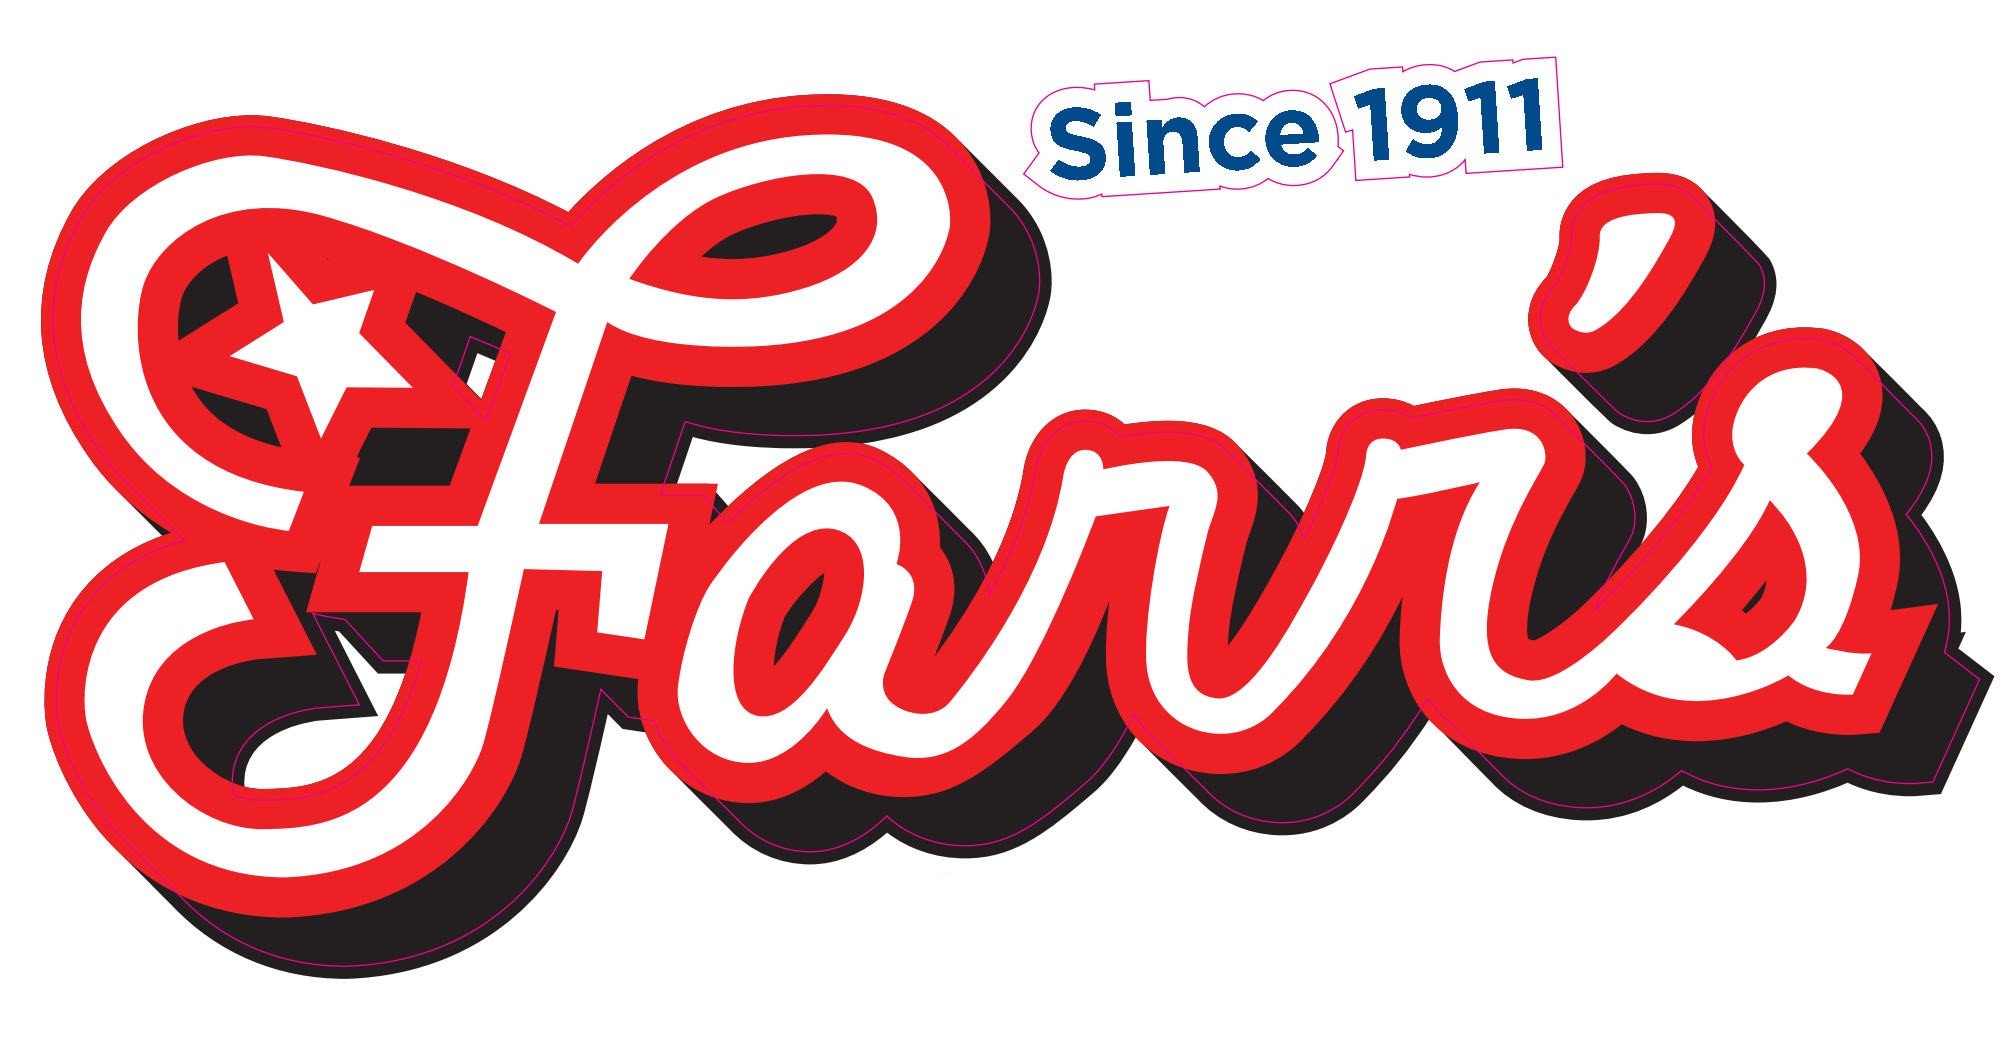 Farr Candy Company Inc.